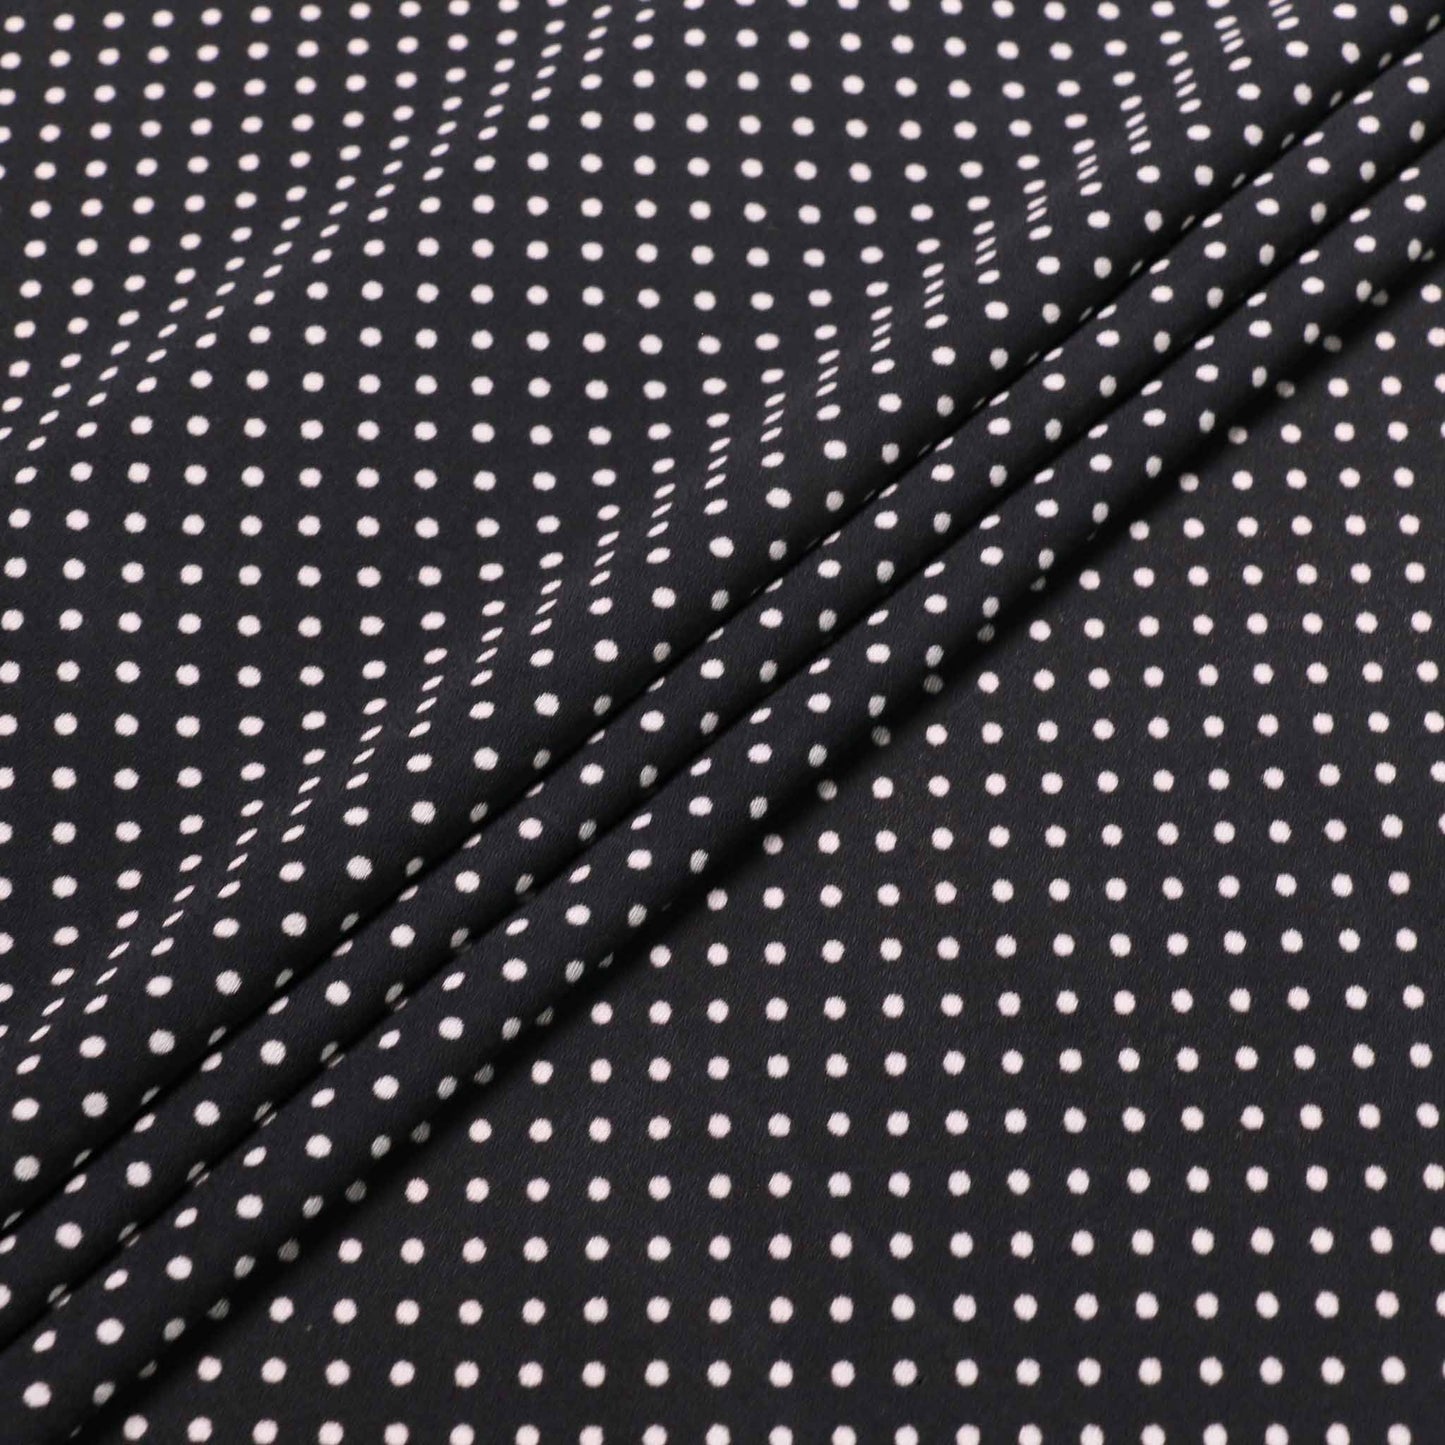 folded black and white polka dot fabric for dressmaking 